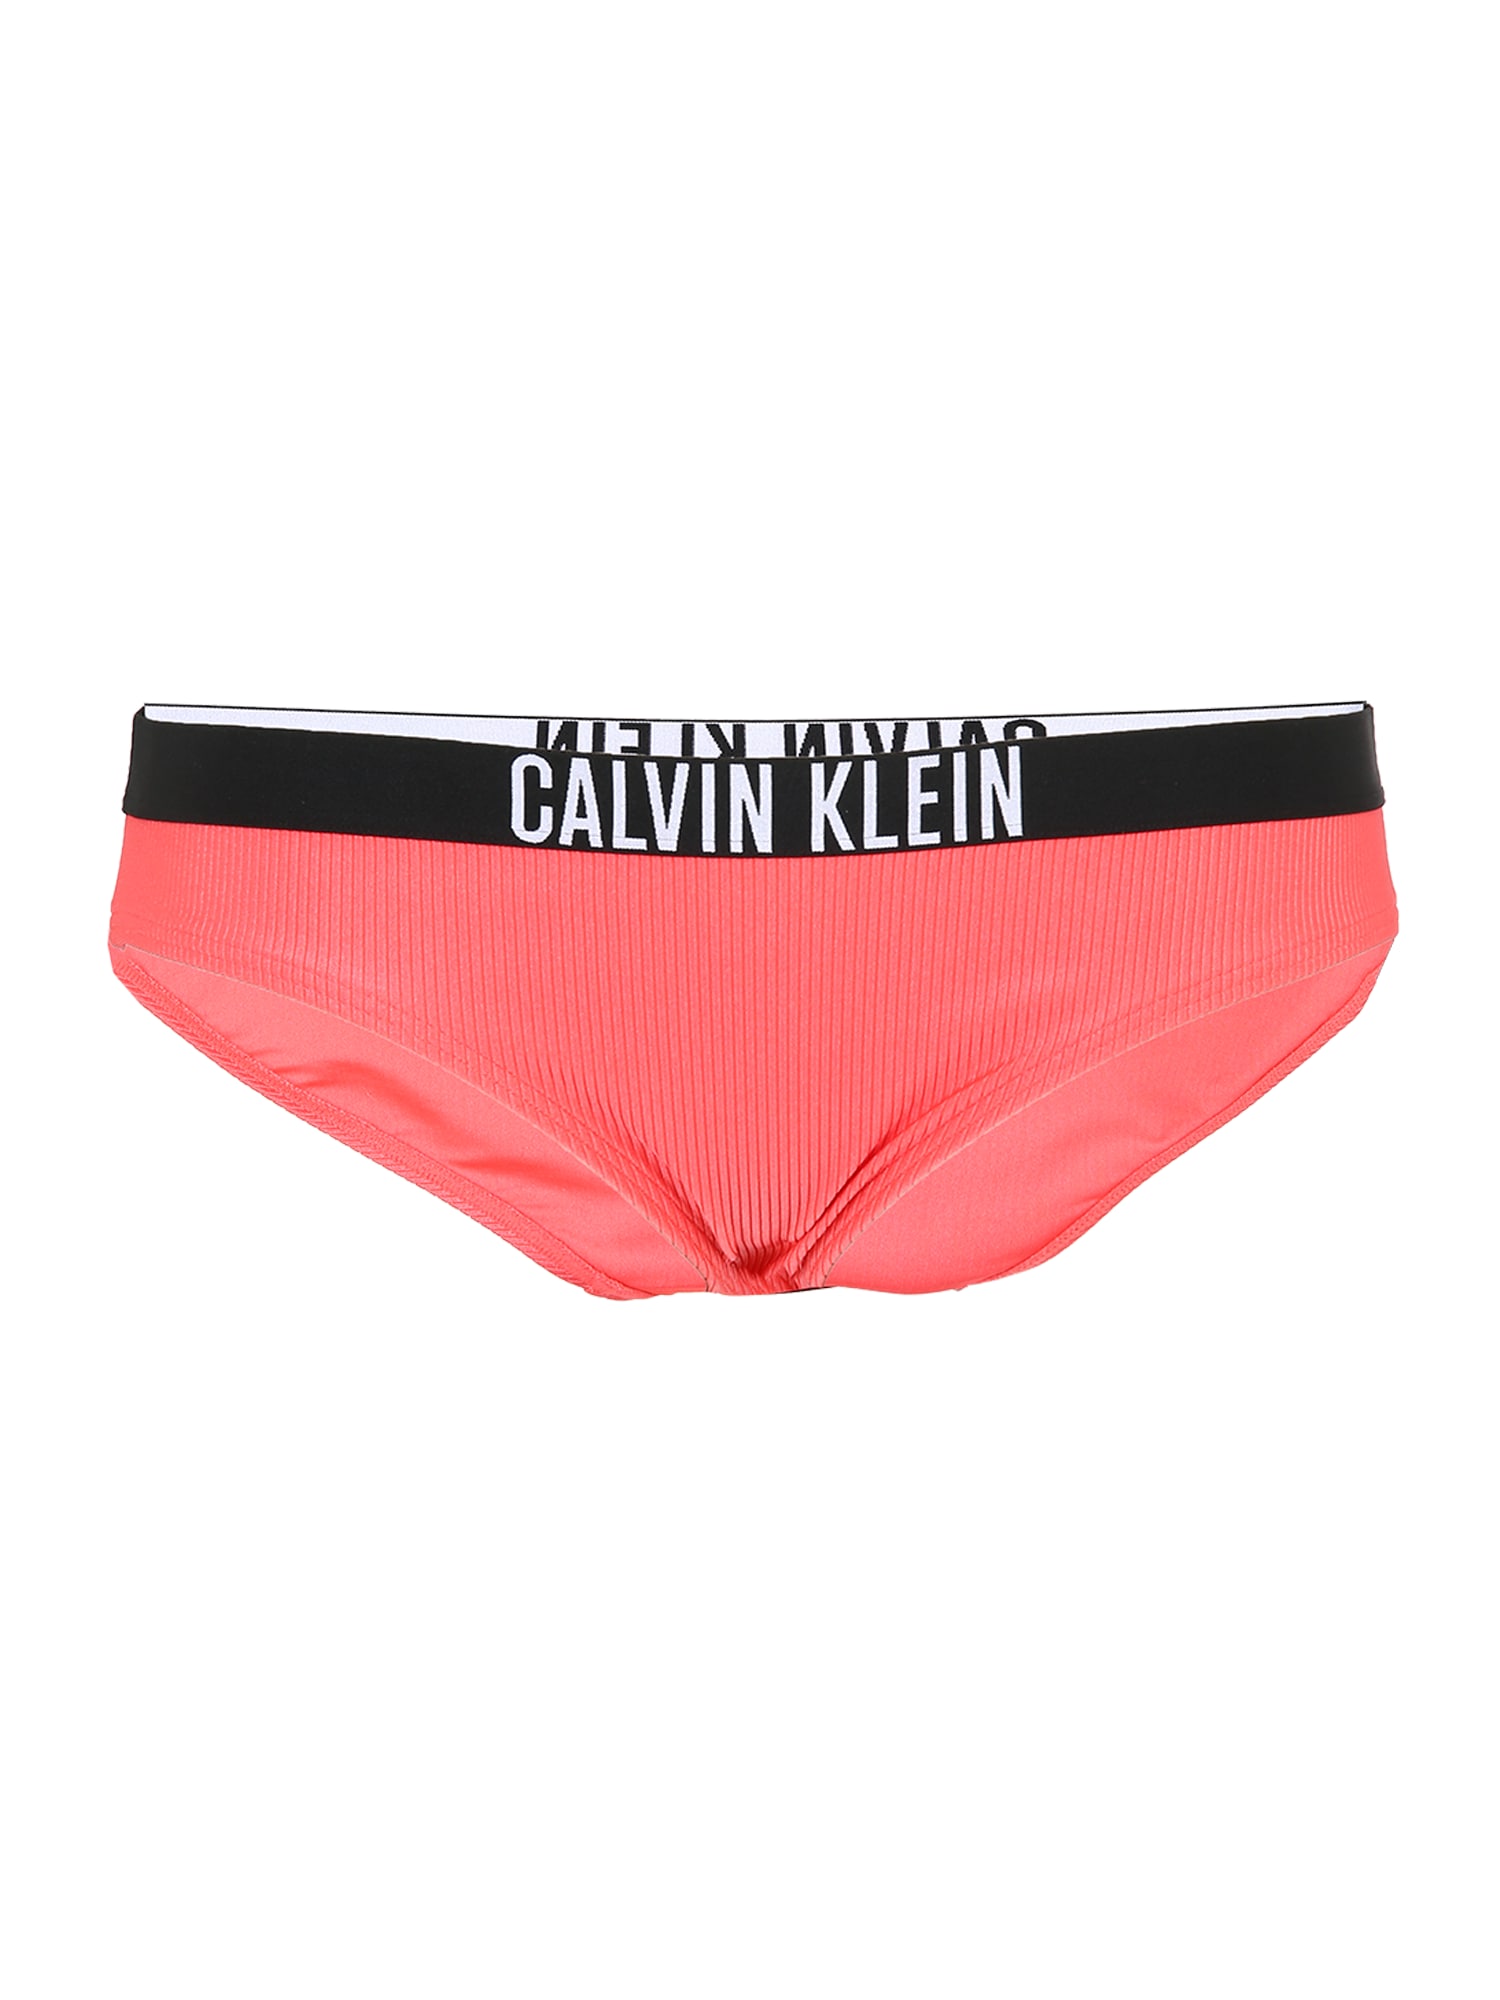 Calvin Klein Swimwear Plus Bikinio kelnaitės abrikosų spalva / juoda / balta